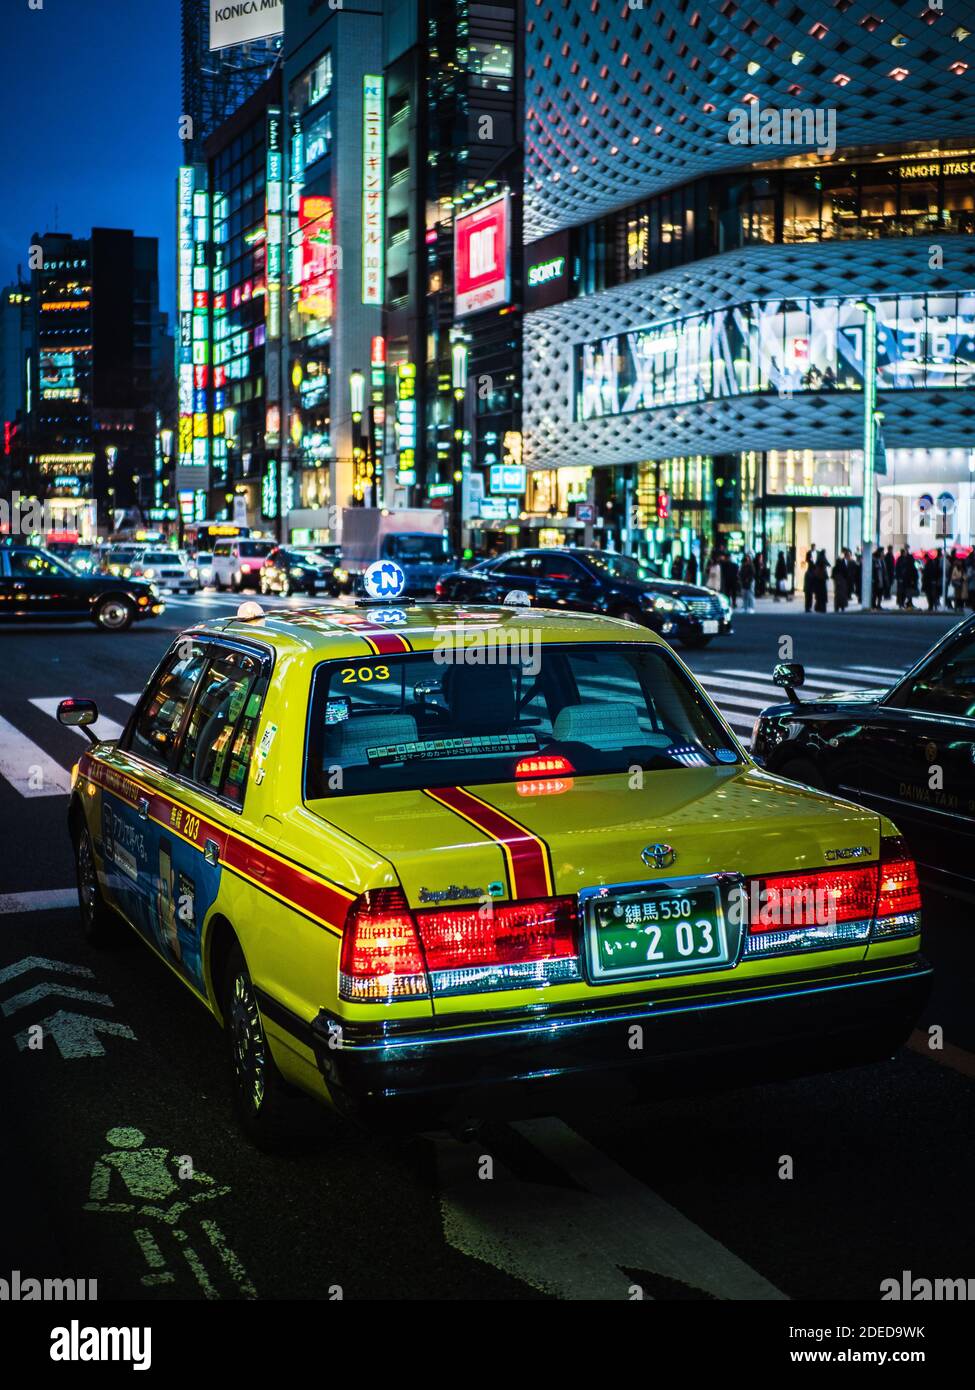 Tokyo Taxis at Night. Tokyo Taxi at night with illuminated sign Stock Photo